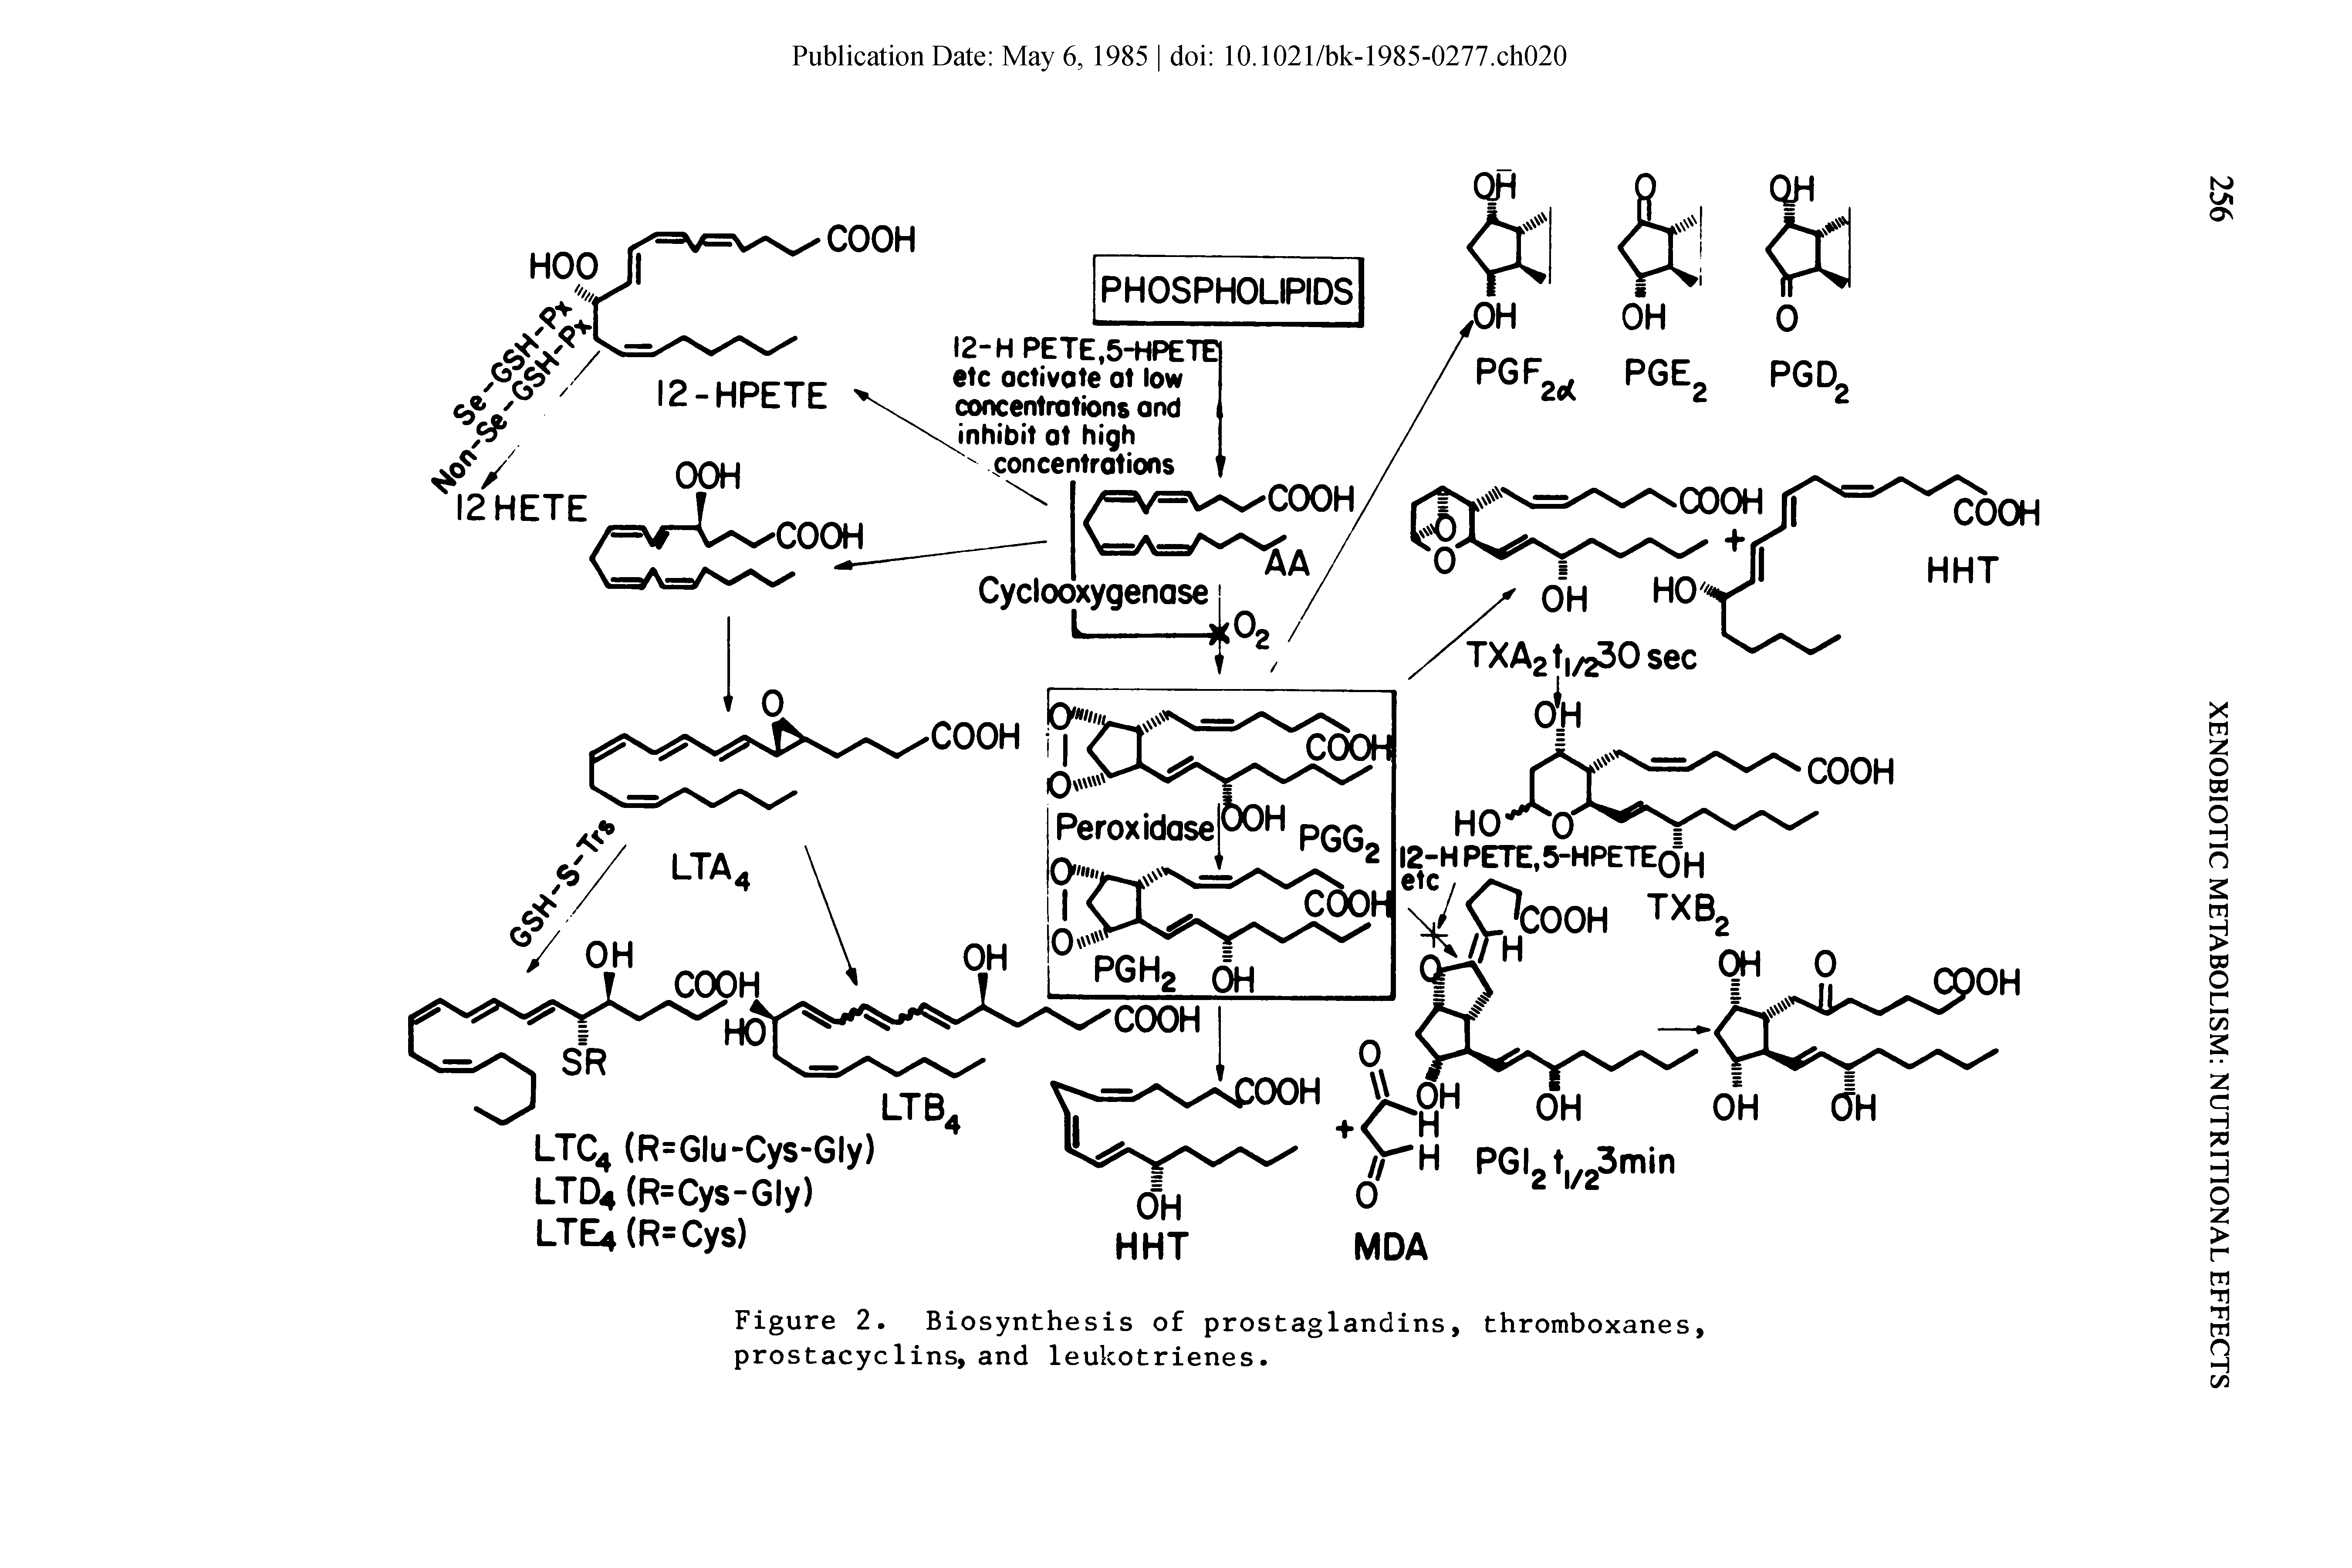 Figure 2. Biosynthesis of prostaglandins, thromboxanes, prostacyclins, and leukotrienes.